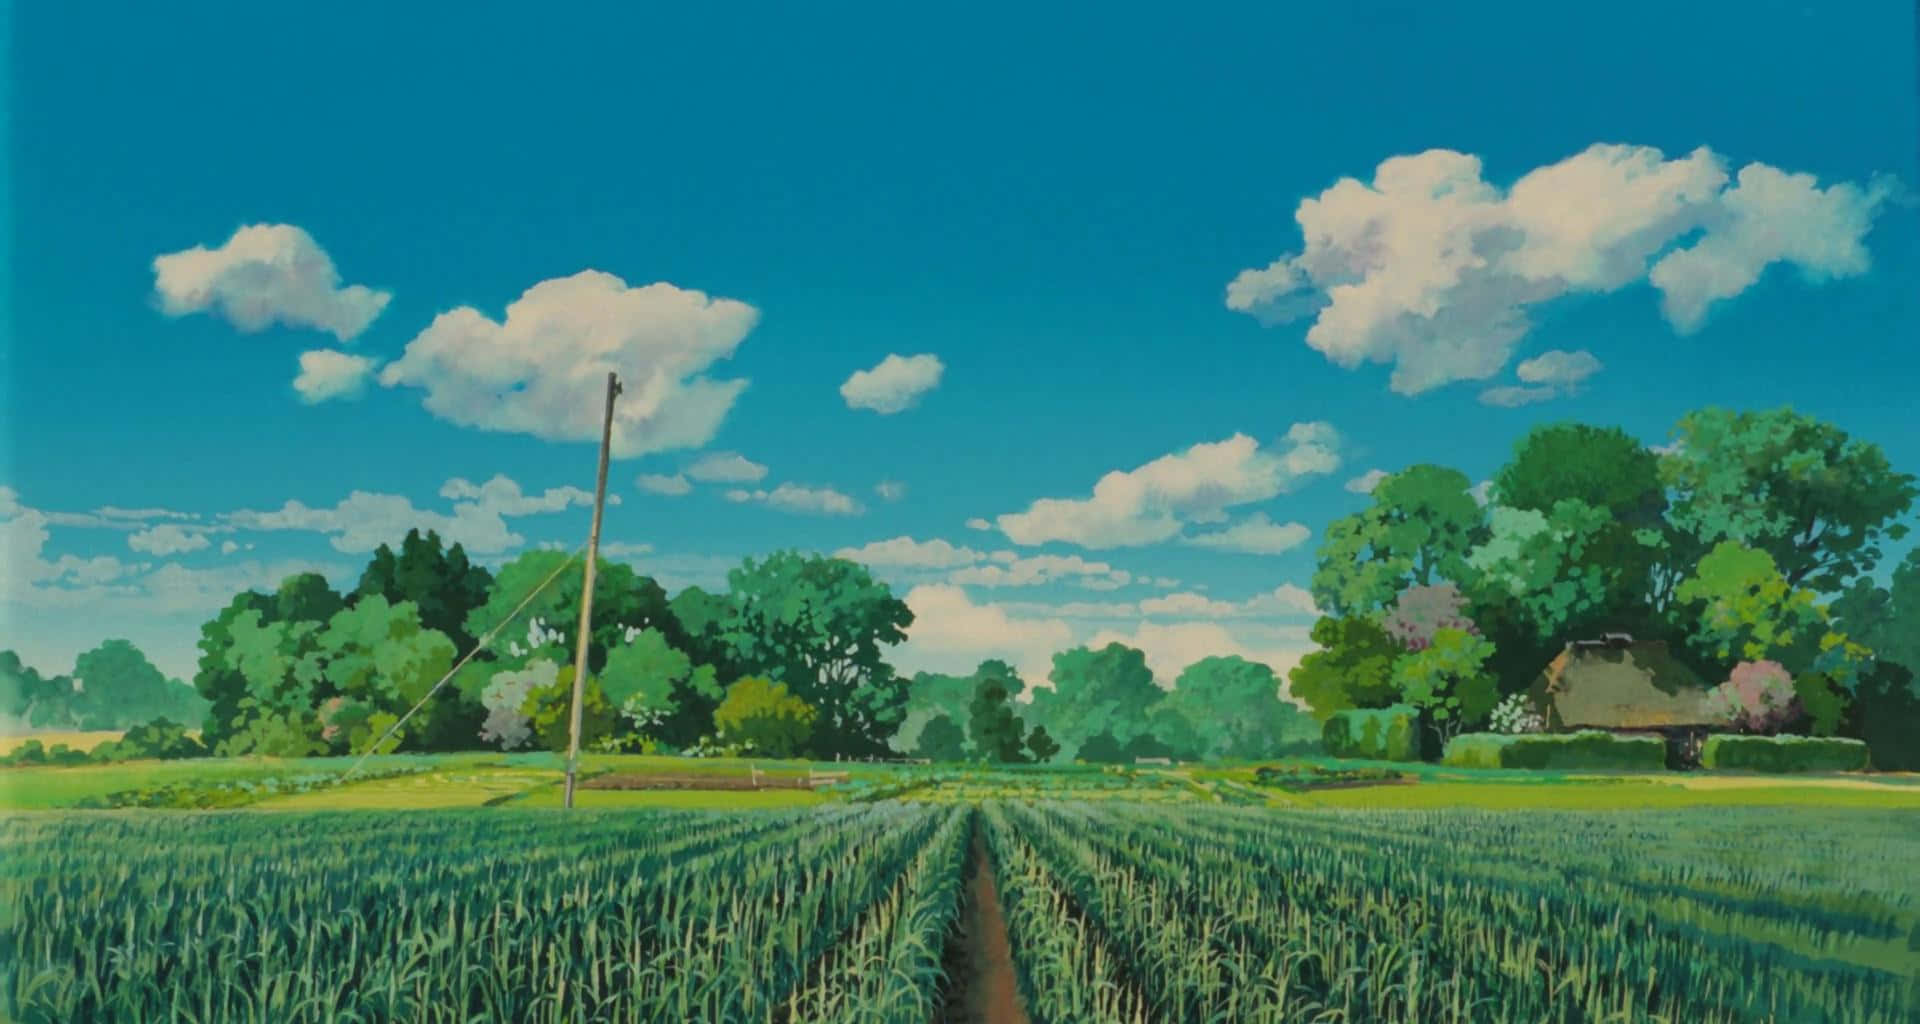 Enchanting Studio Ghibli Forest Landscape